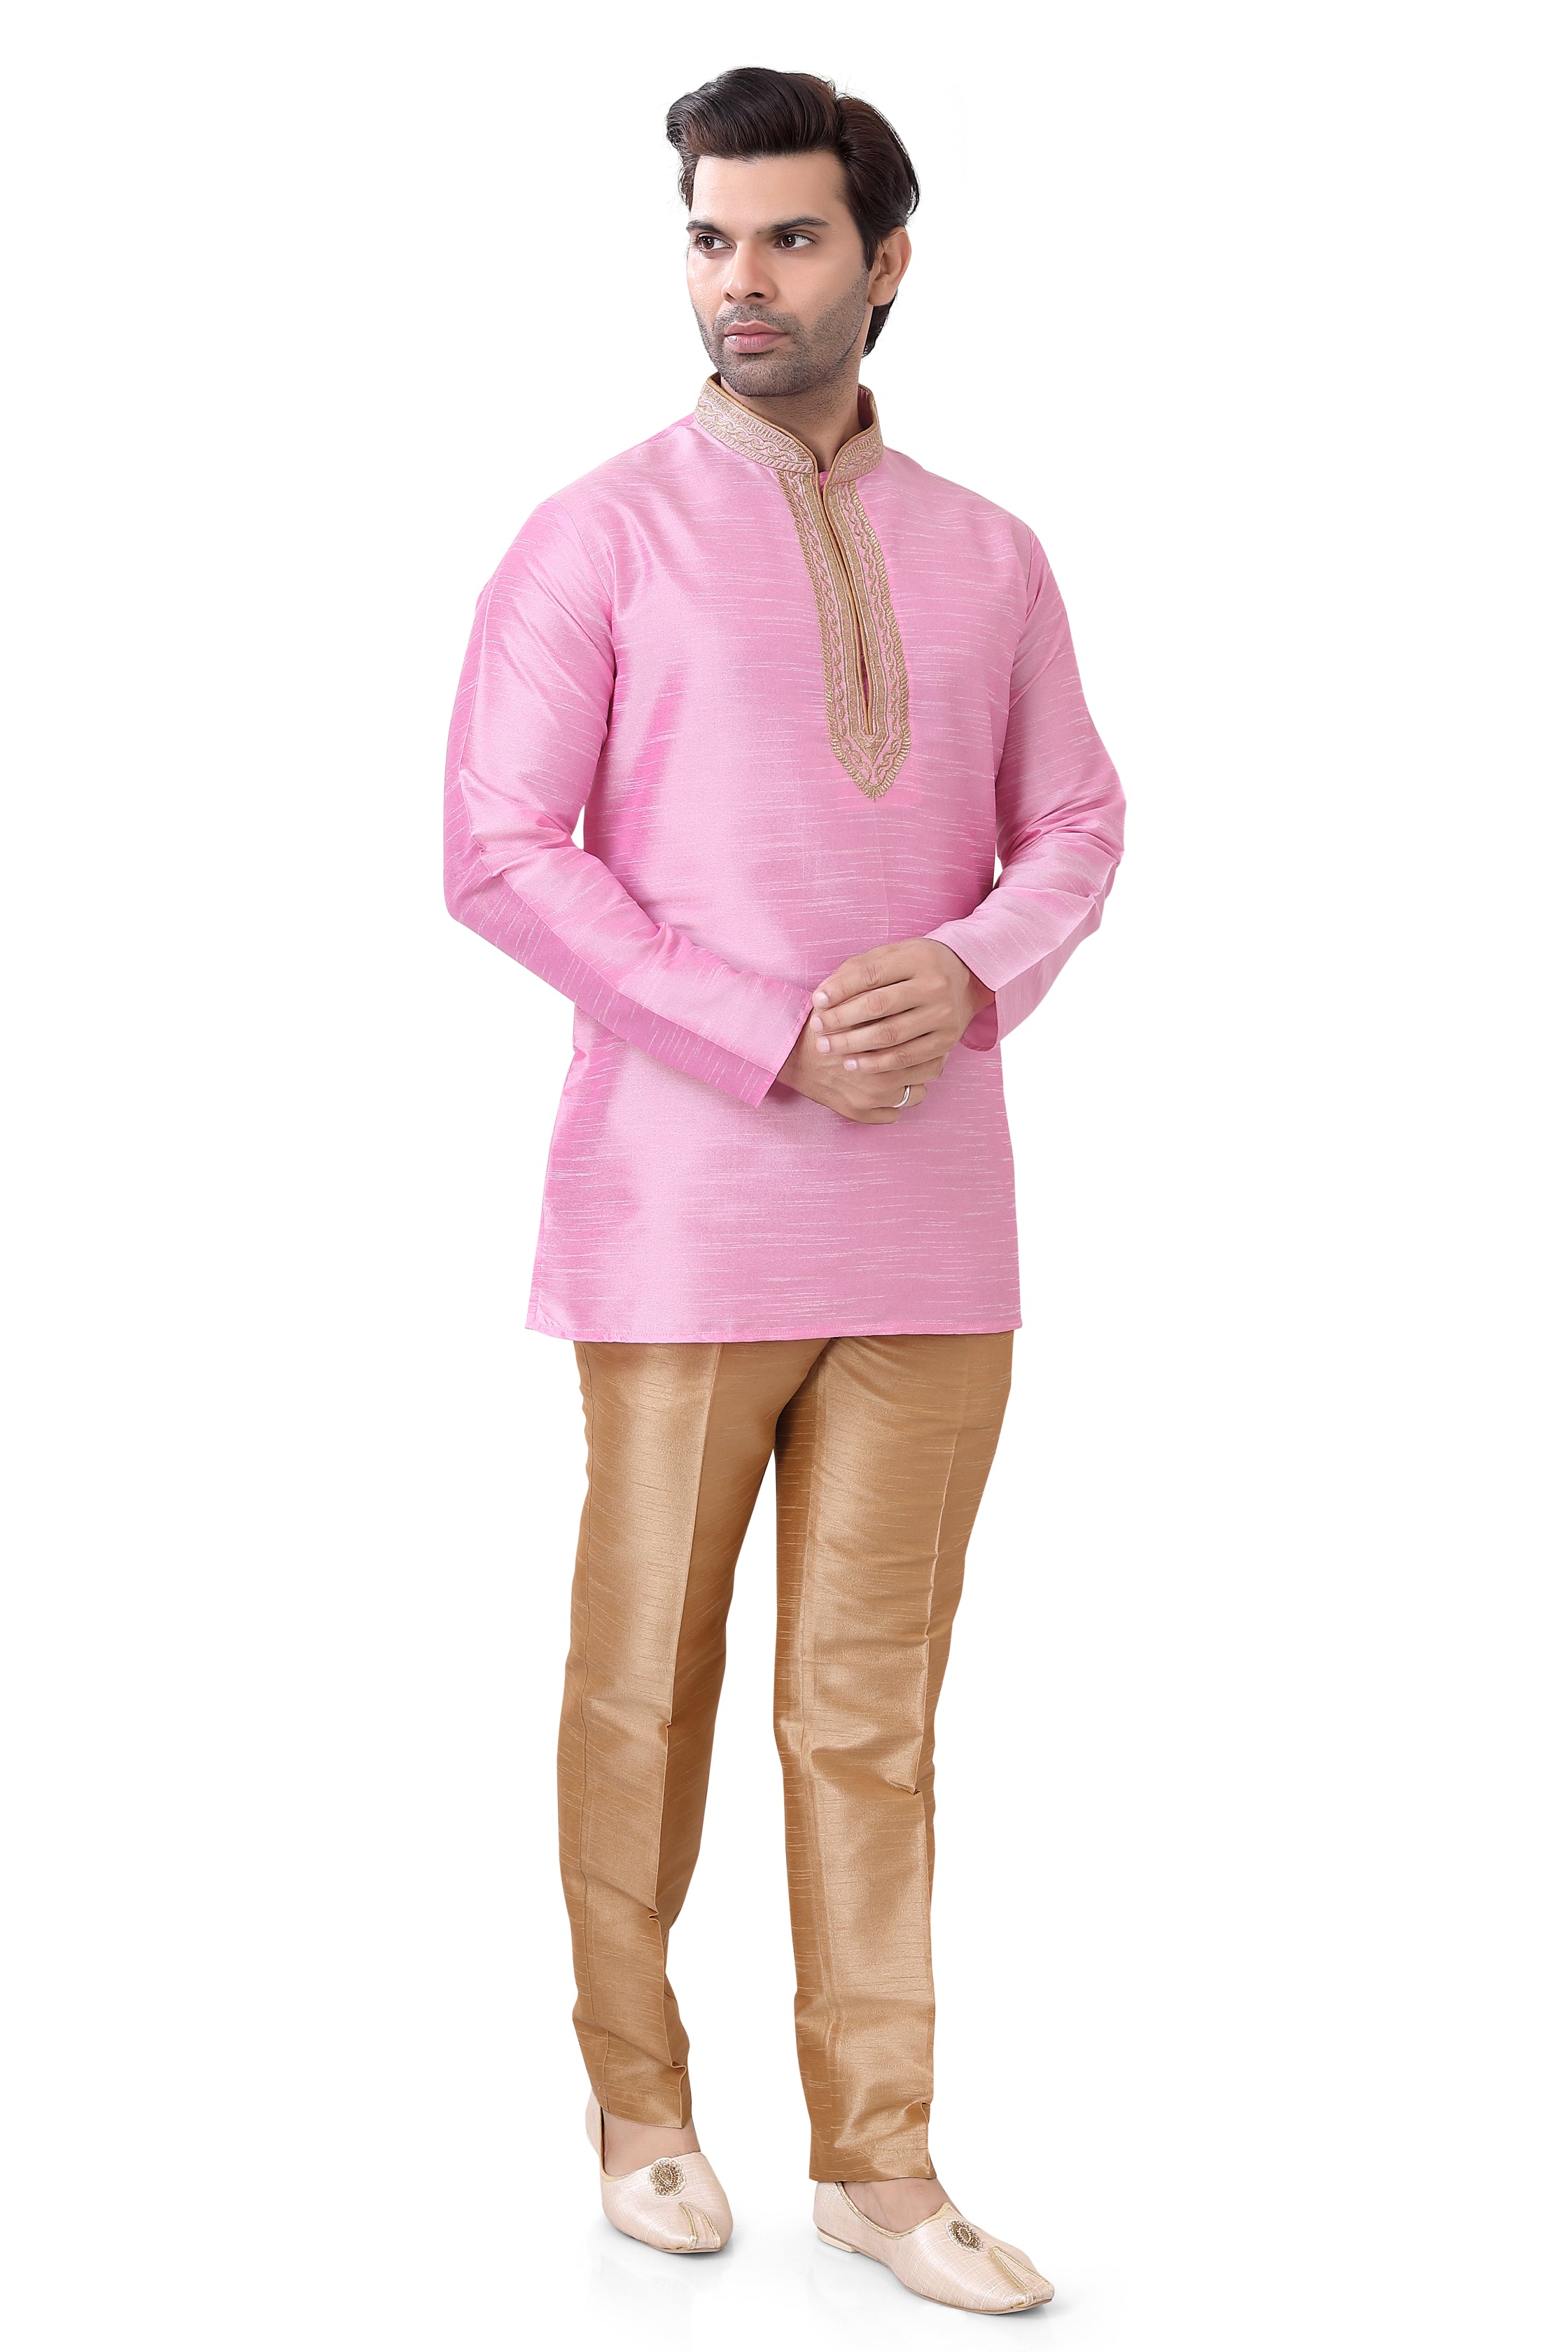 Banarasi Dupion Silk Short Kurta with embroidery in Pink color